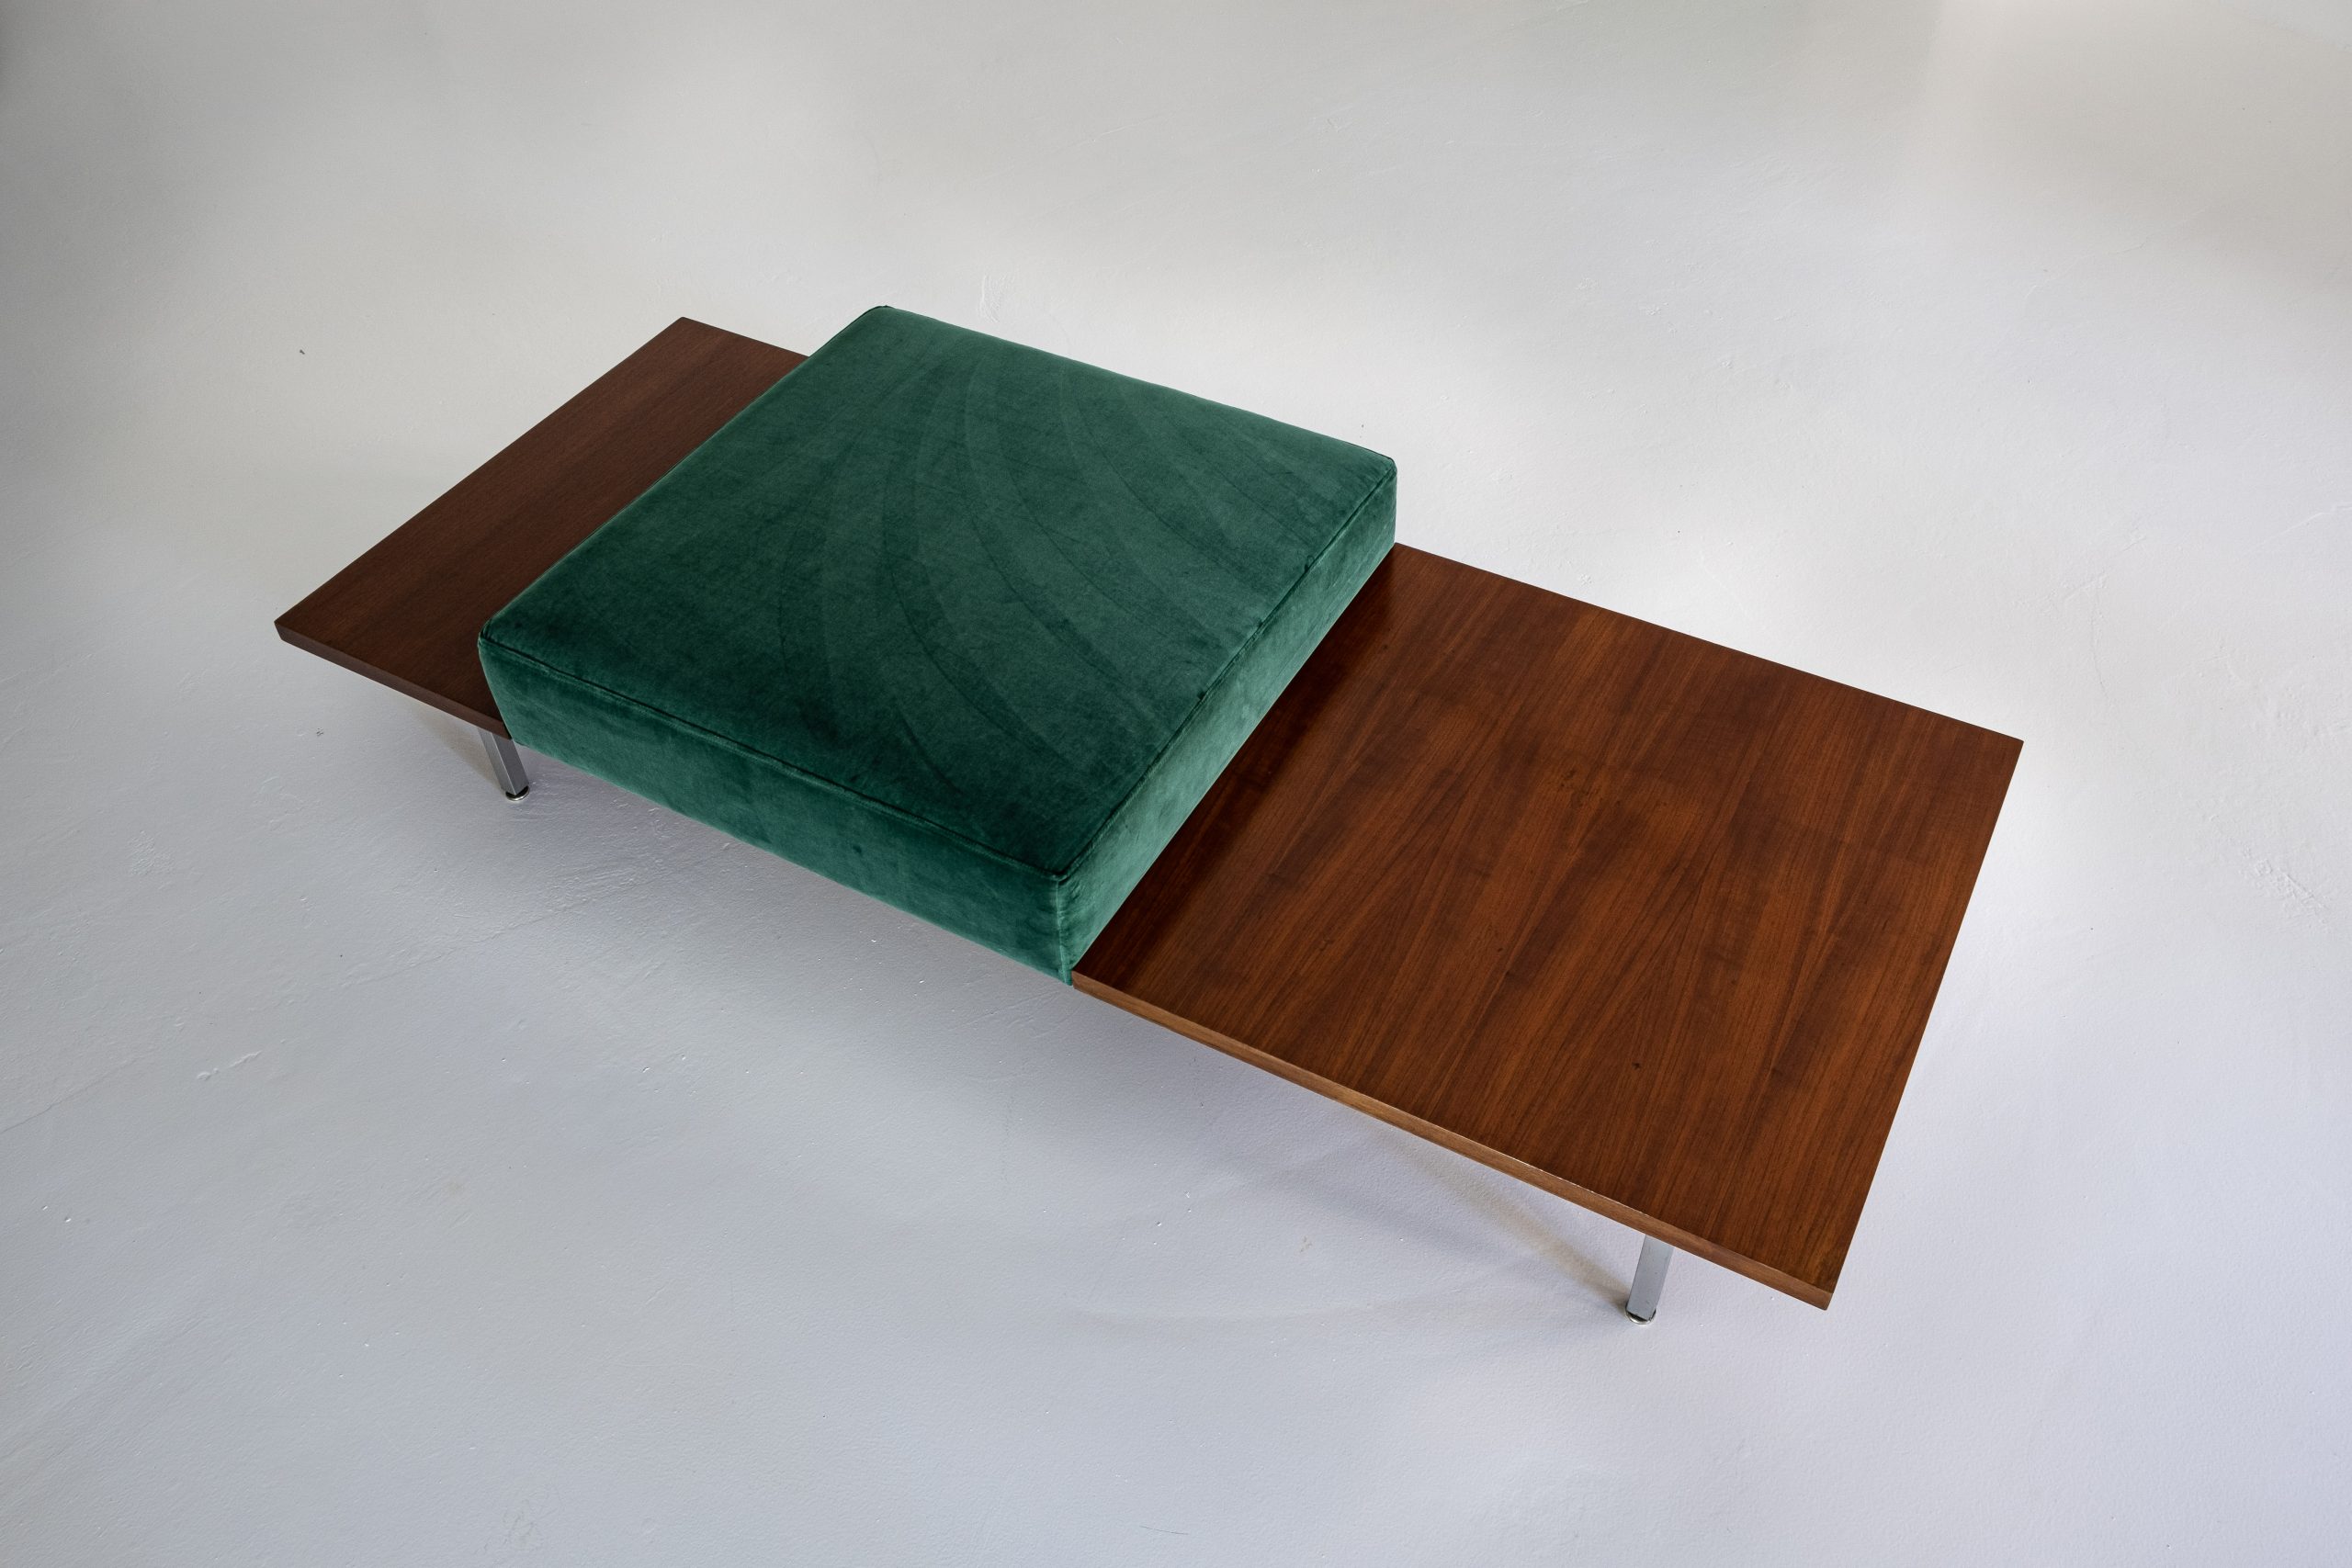 George nelson, table bench, herman miller, antibeige, vintage, midcentury modern, rustic, collectible, interior